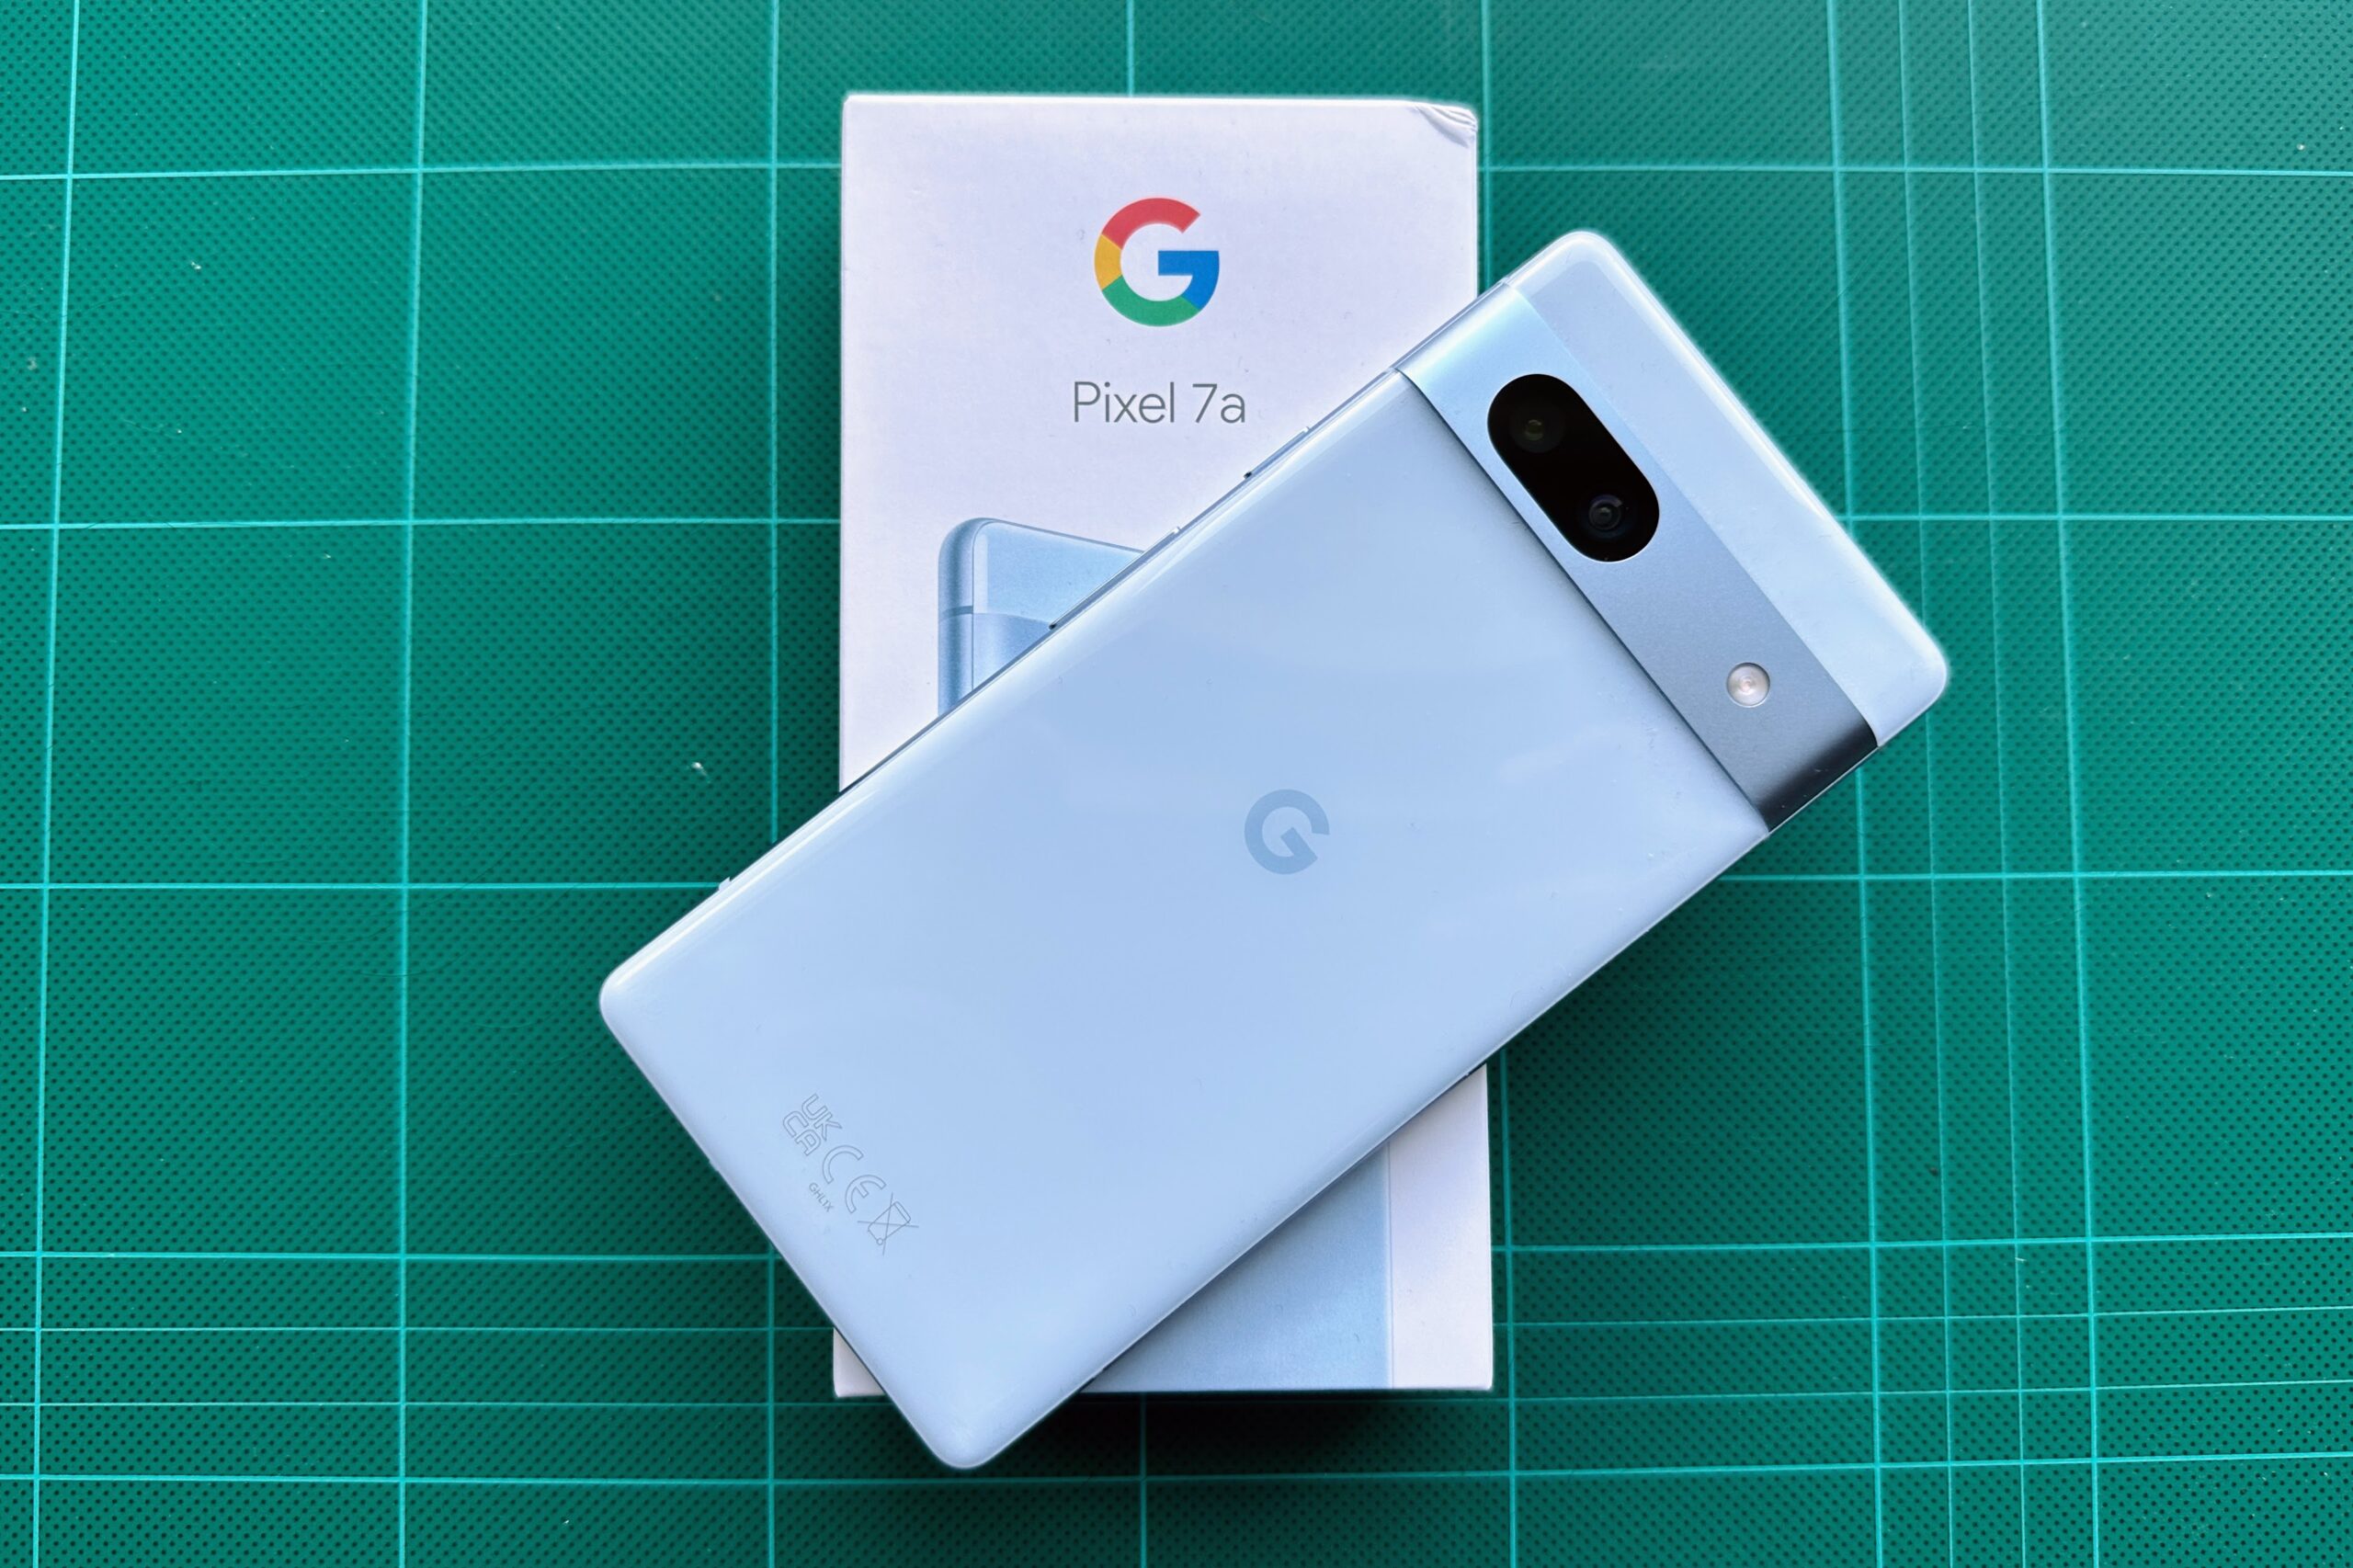 Google Pixel 7a